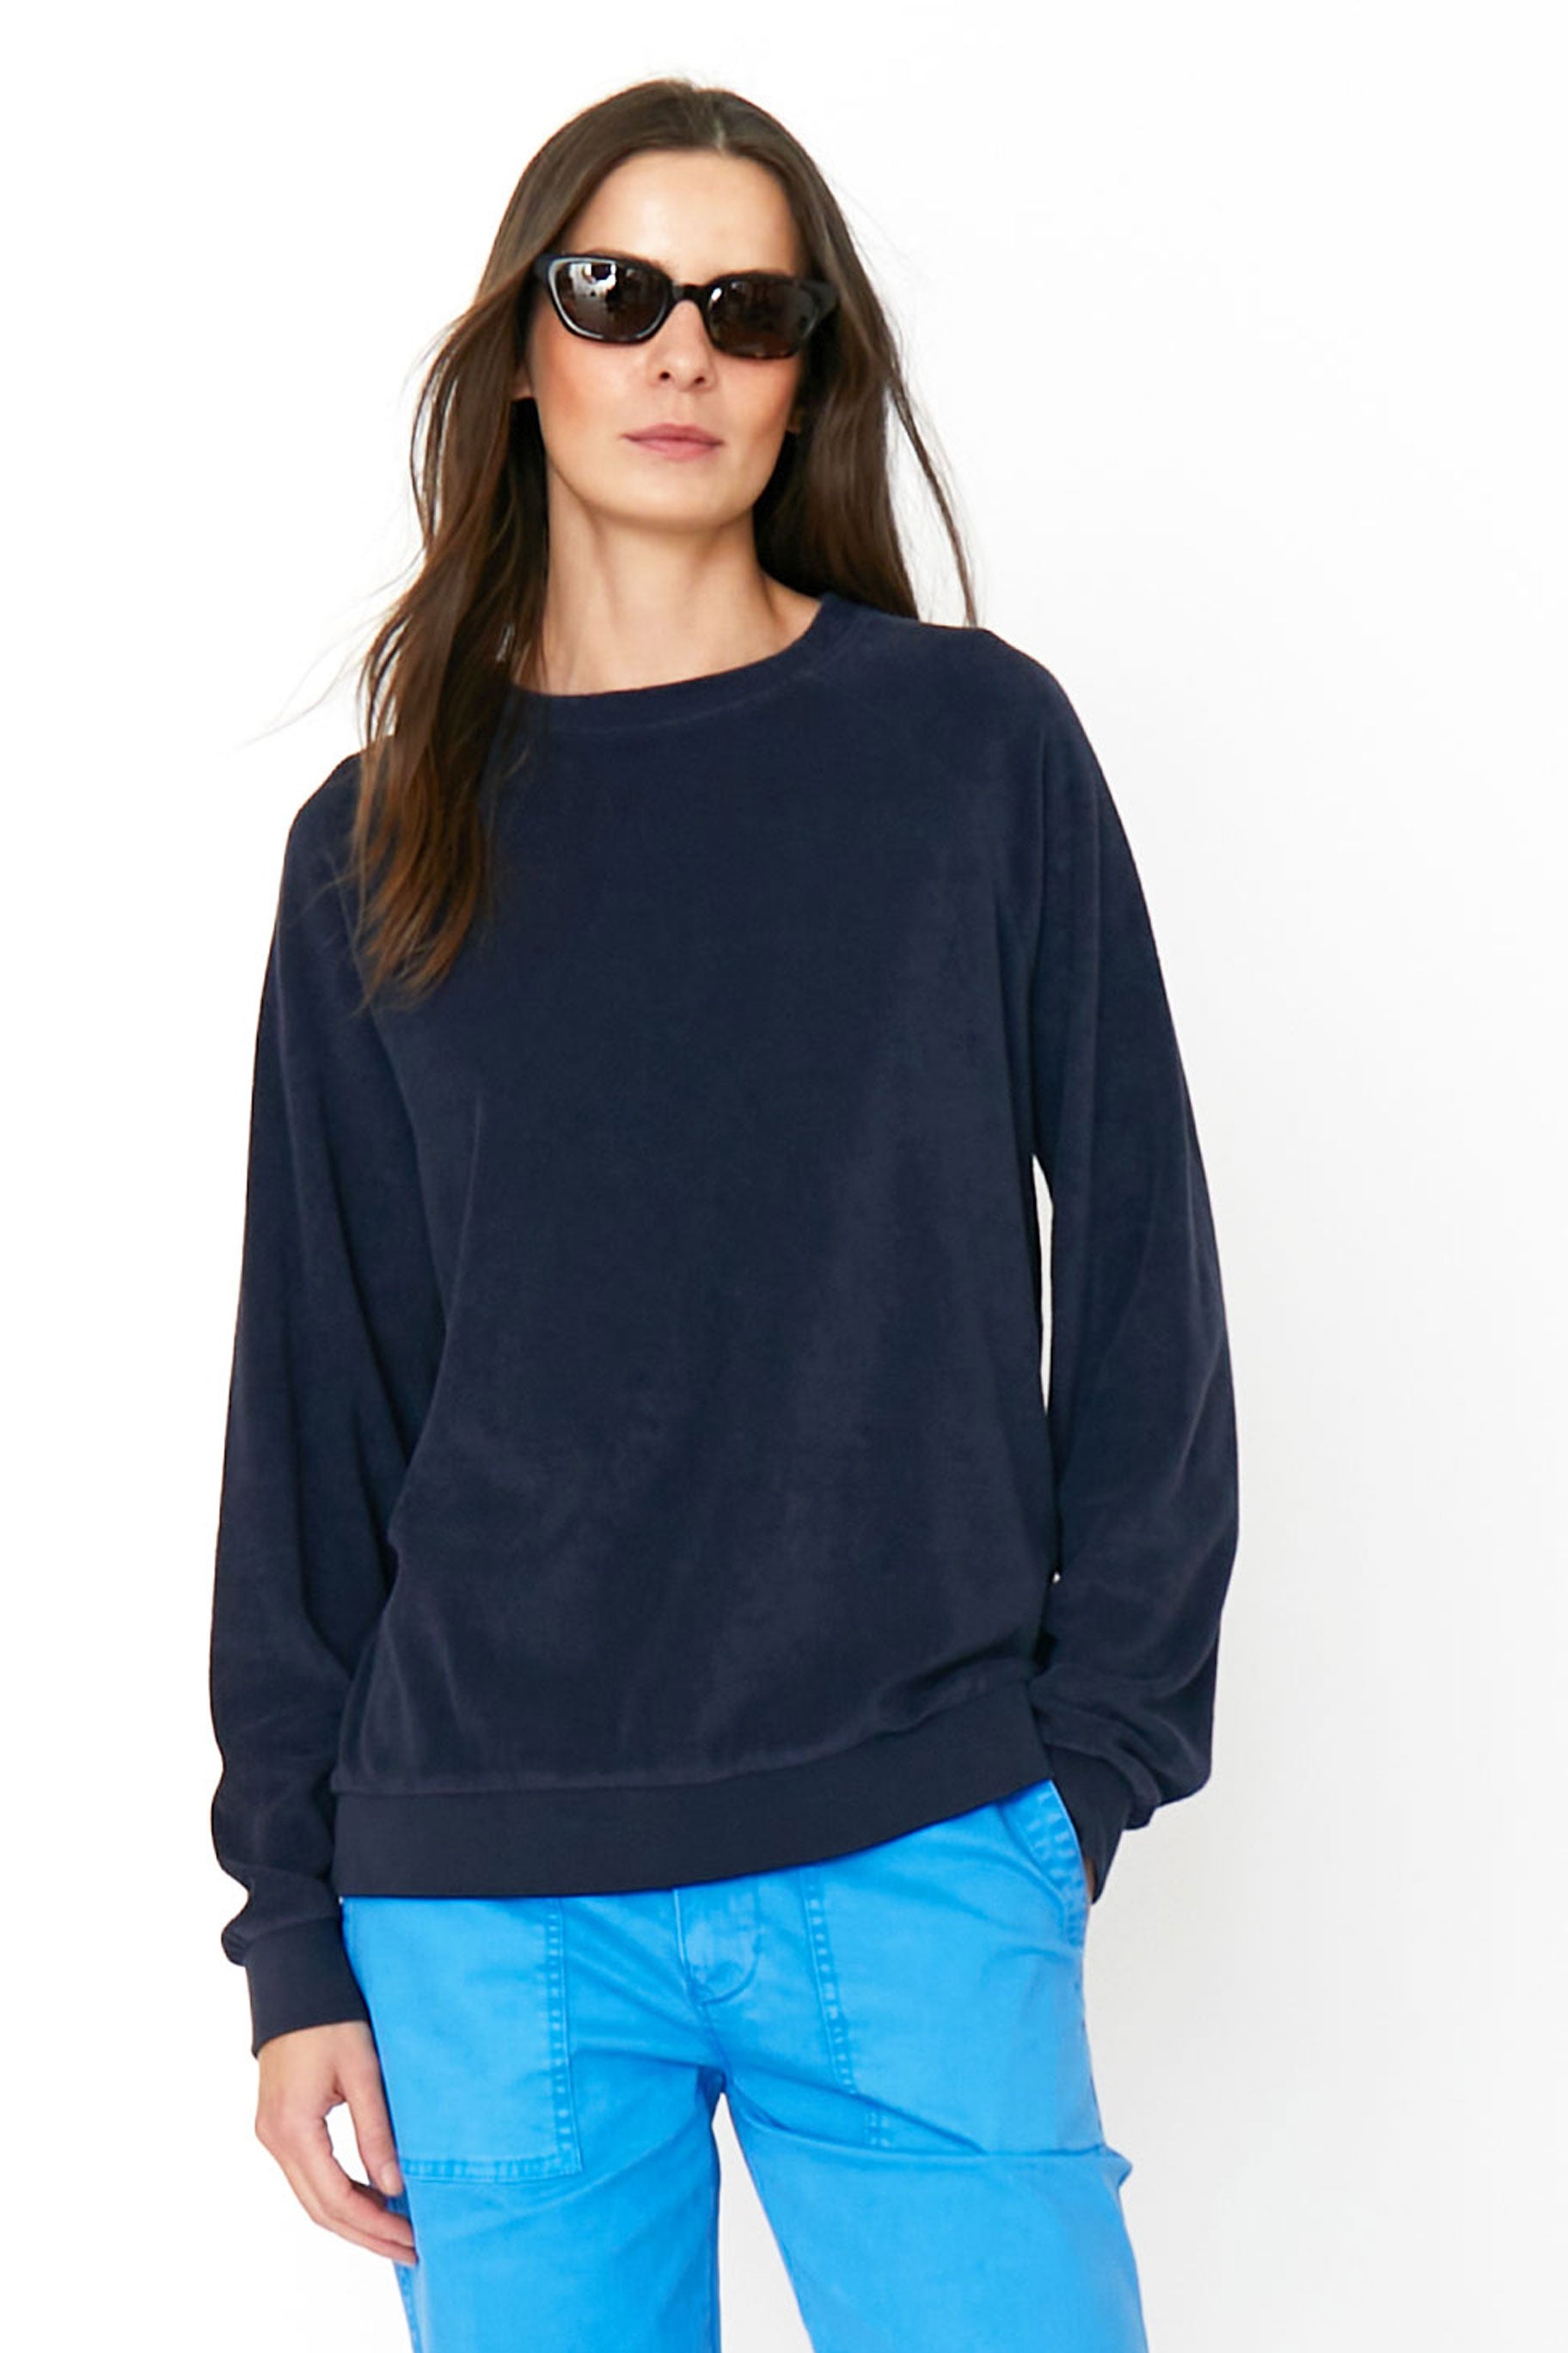 The Women's Organic Sweatpants - Heather Grey – KULE